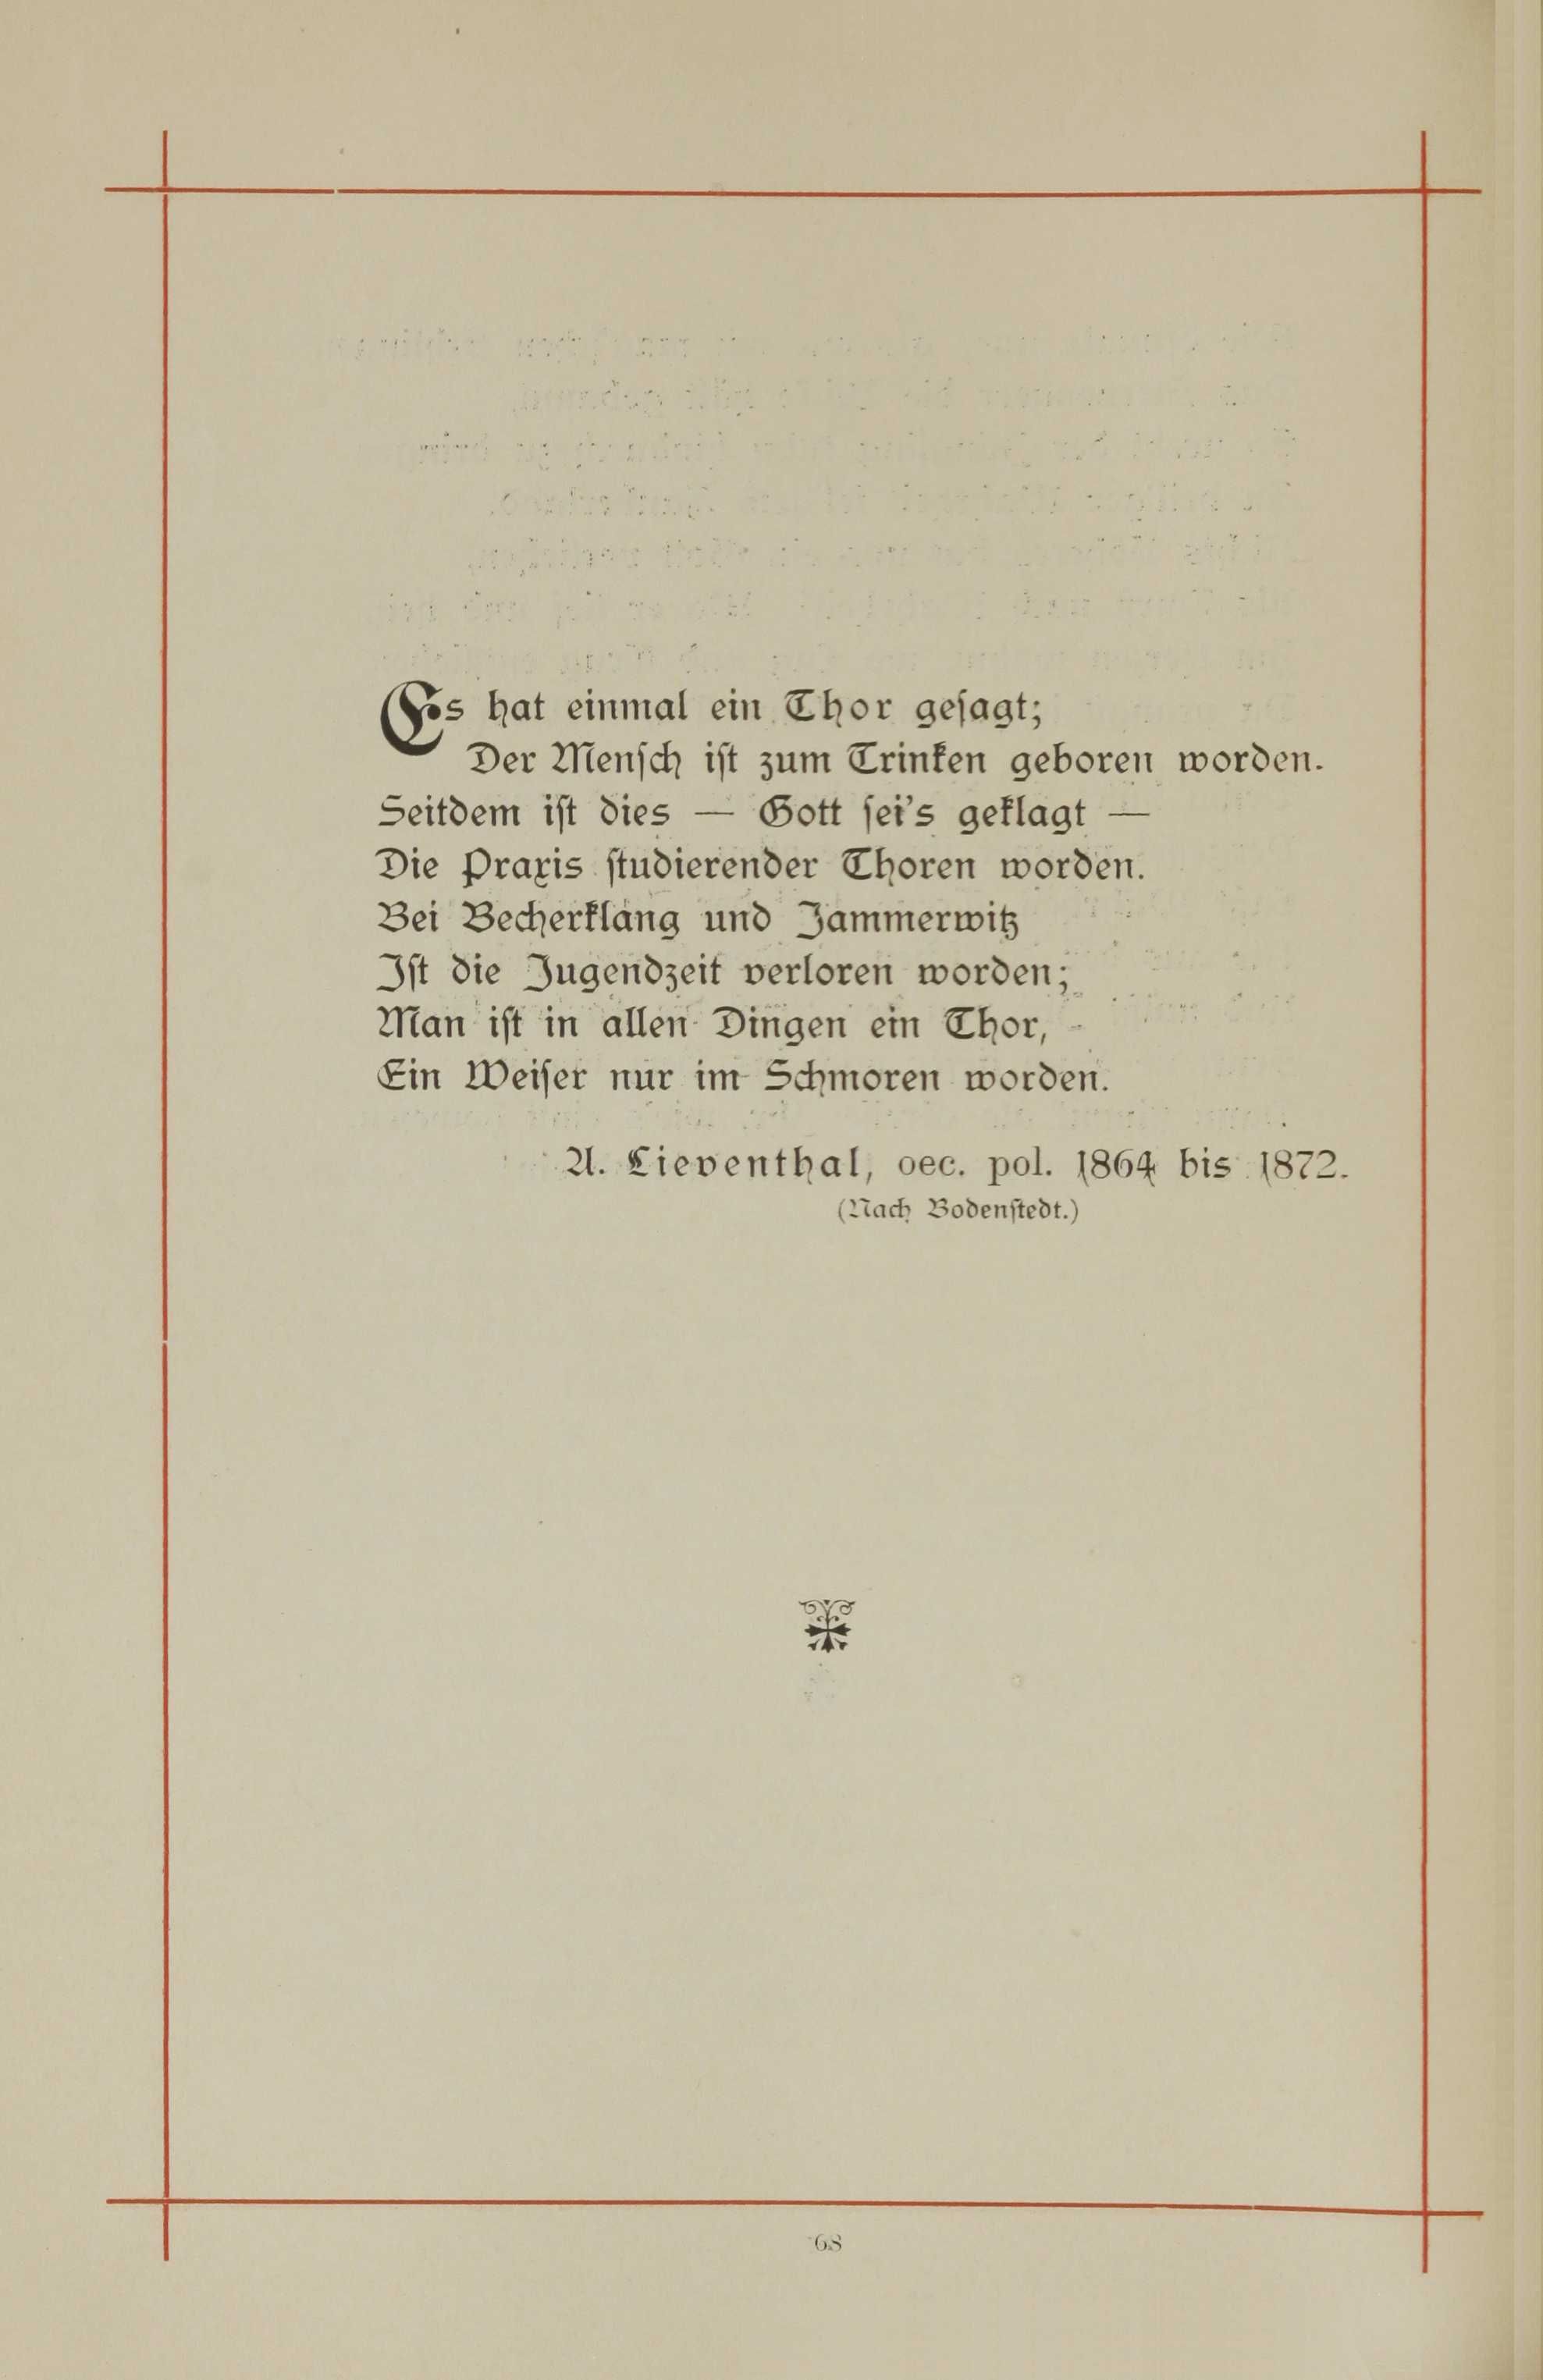 Erinnerung an die Fraternitas (1893) | 73. (68) Main body of text